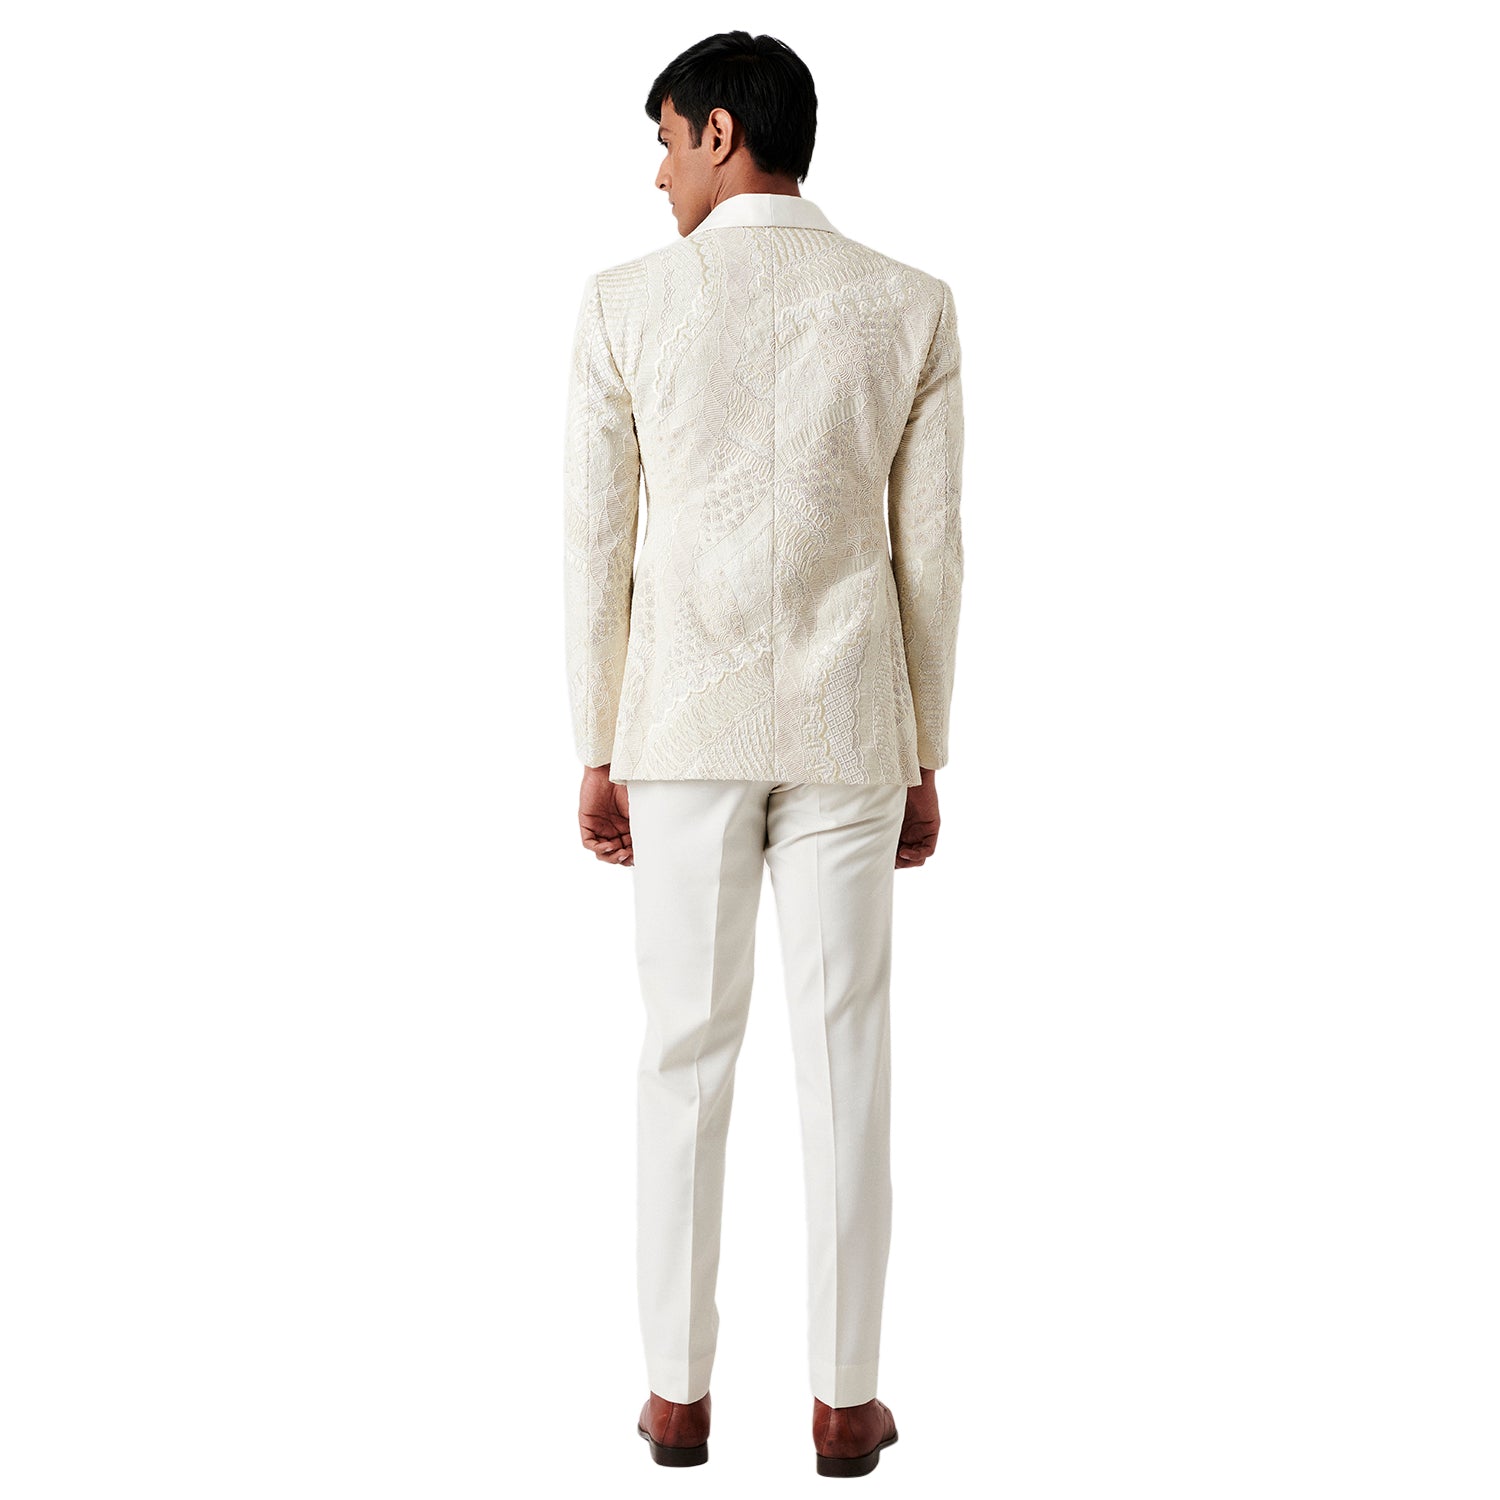 White Embroidered Dinner Jacket